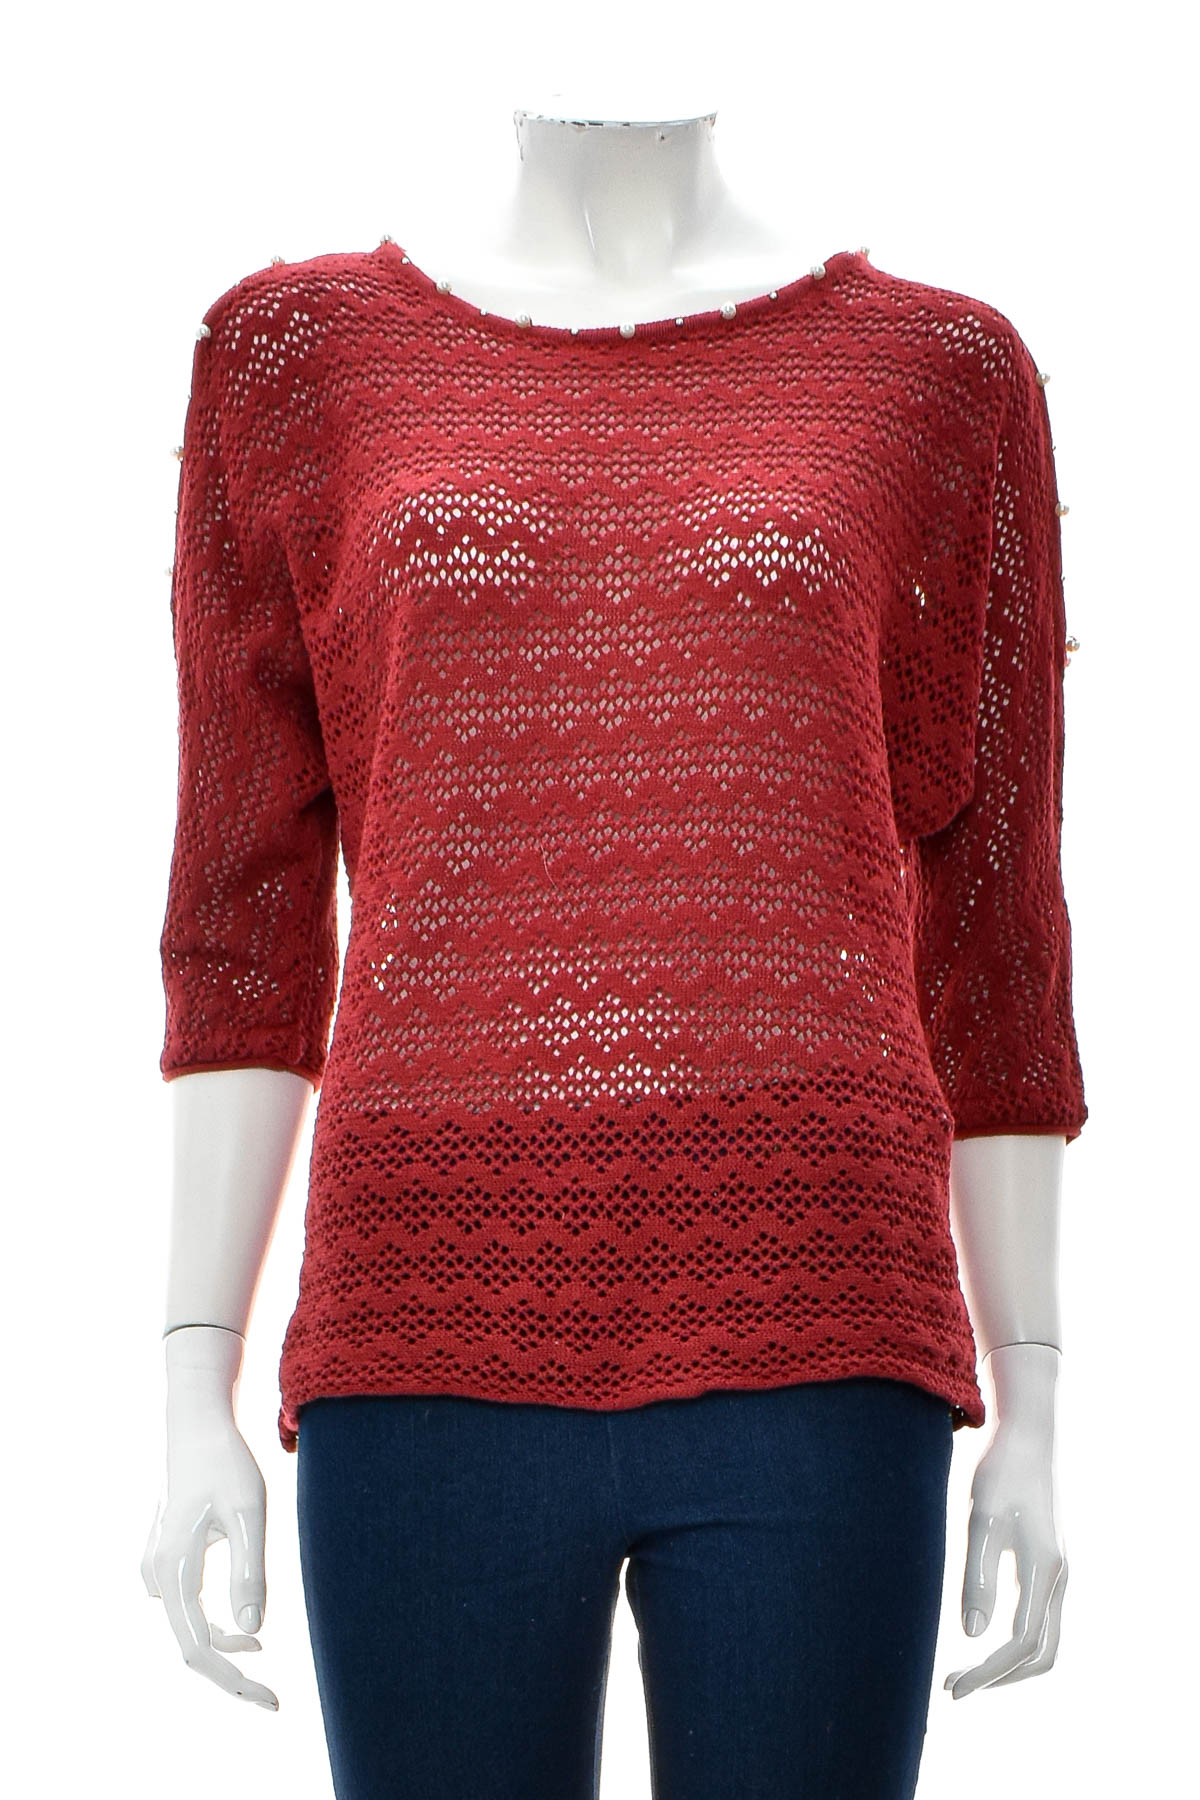 Дамски пуловер - Bpc selection bonprix collection - 0